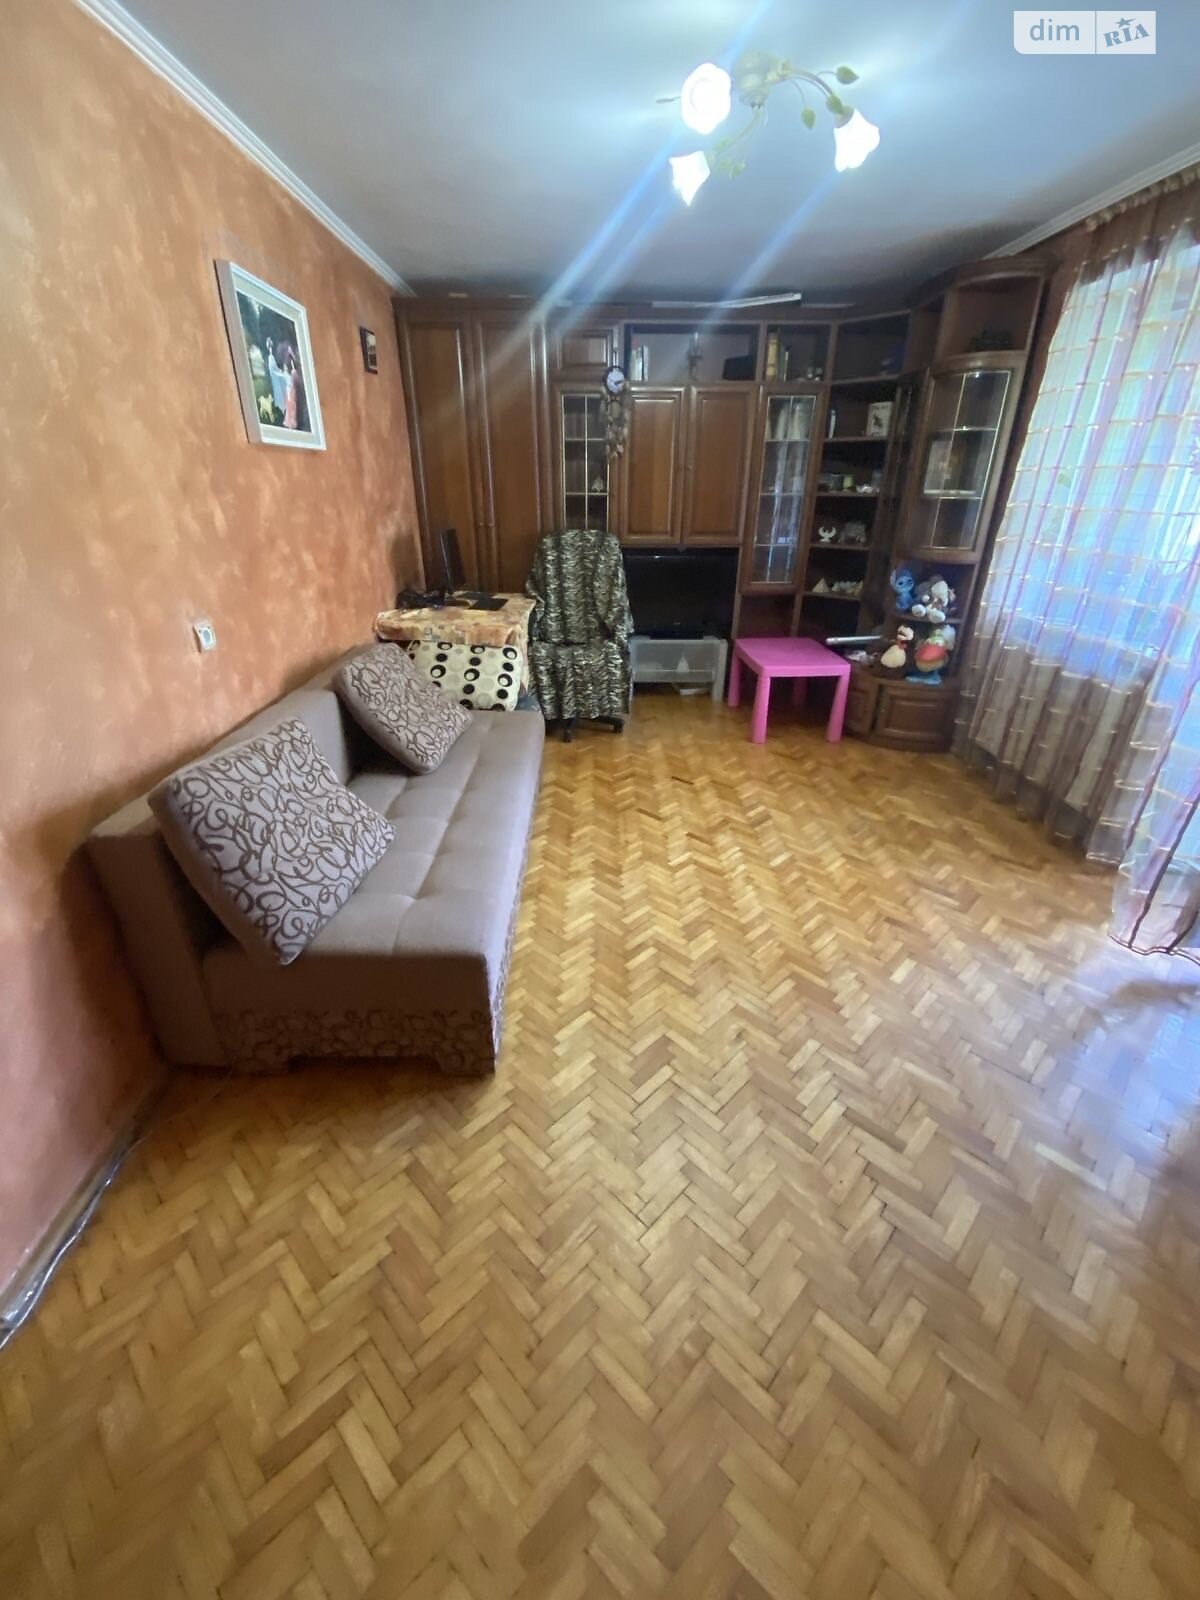 Продажа трехкомнатной квартиры в Ужгороде, на ул. Федора Потушняка 9, район Шахта фото 1